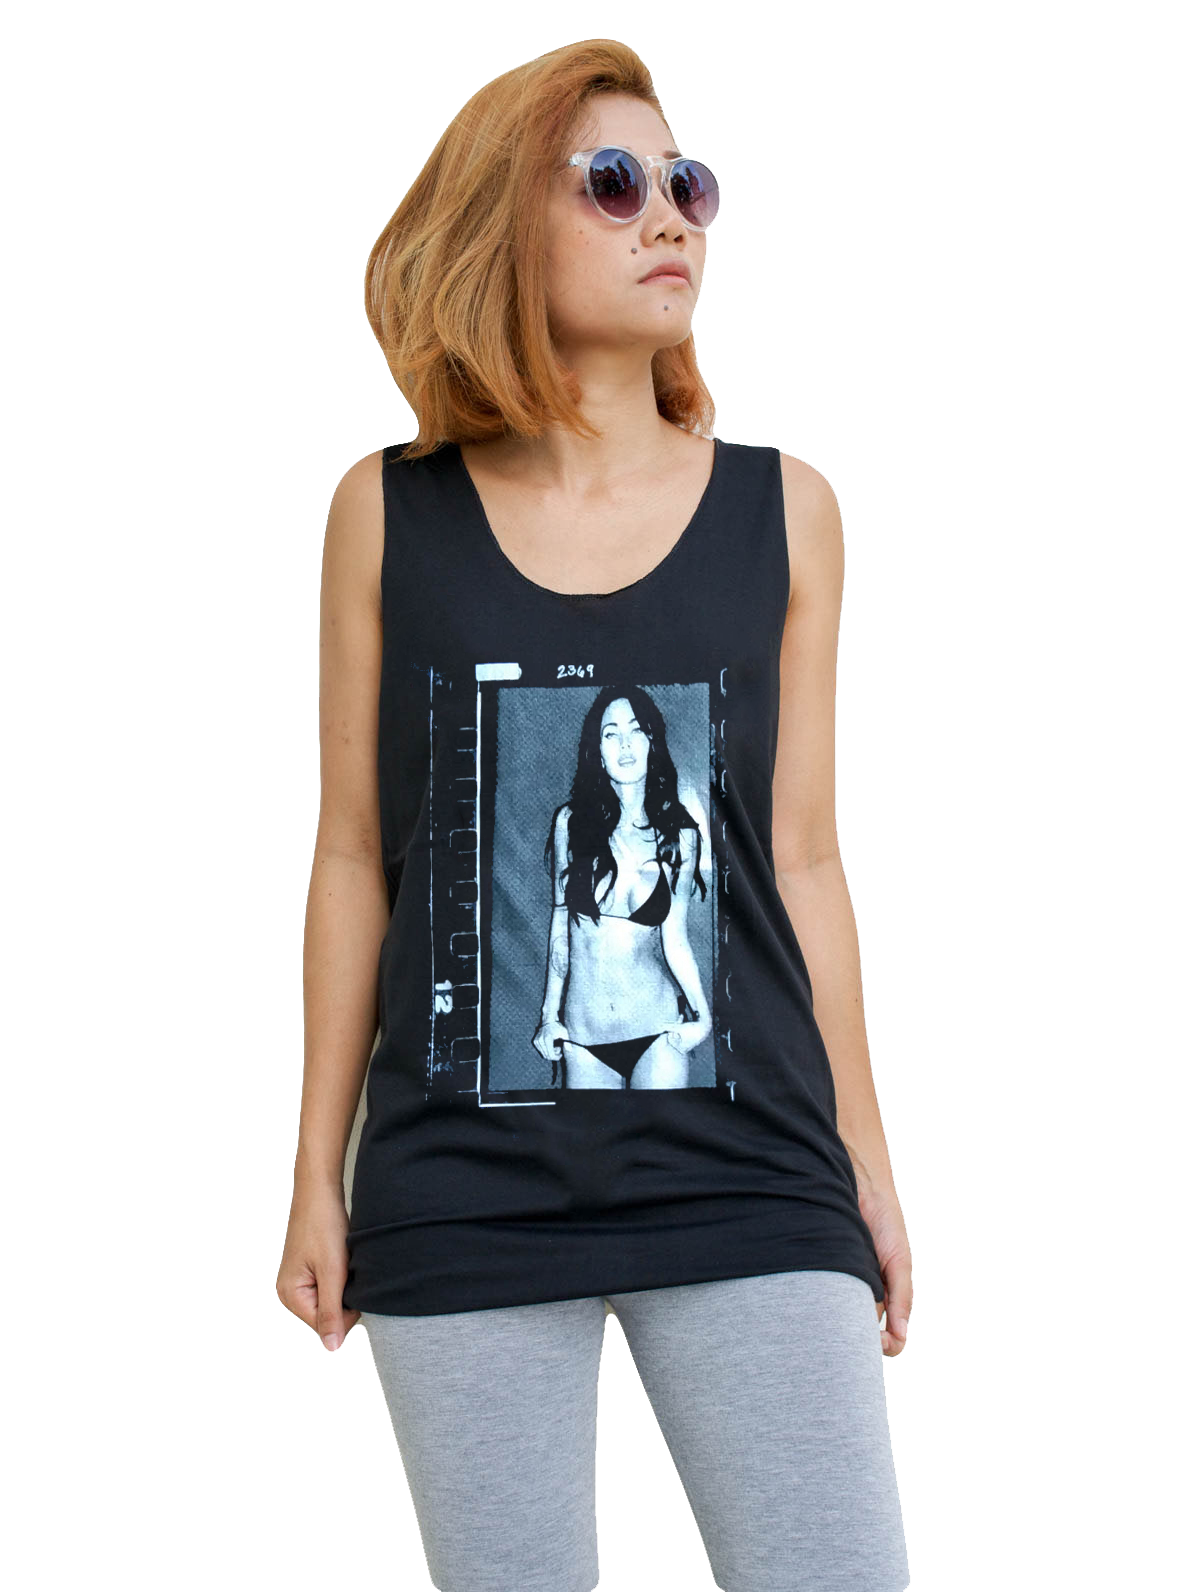 Unisex Megan Fox Tank-Top Singlet vest Sleeveless T-shirt